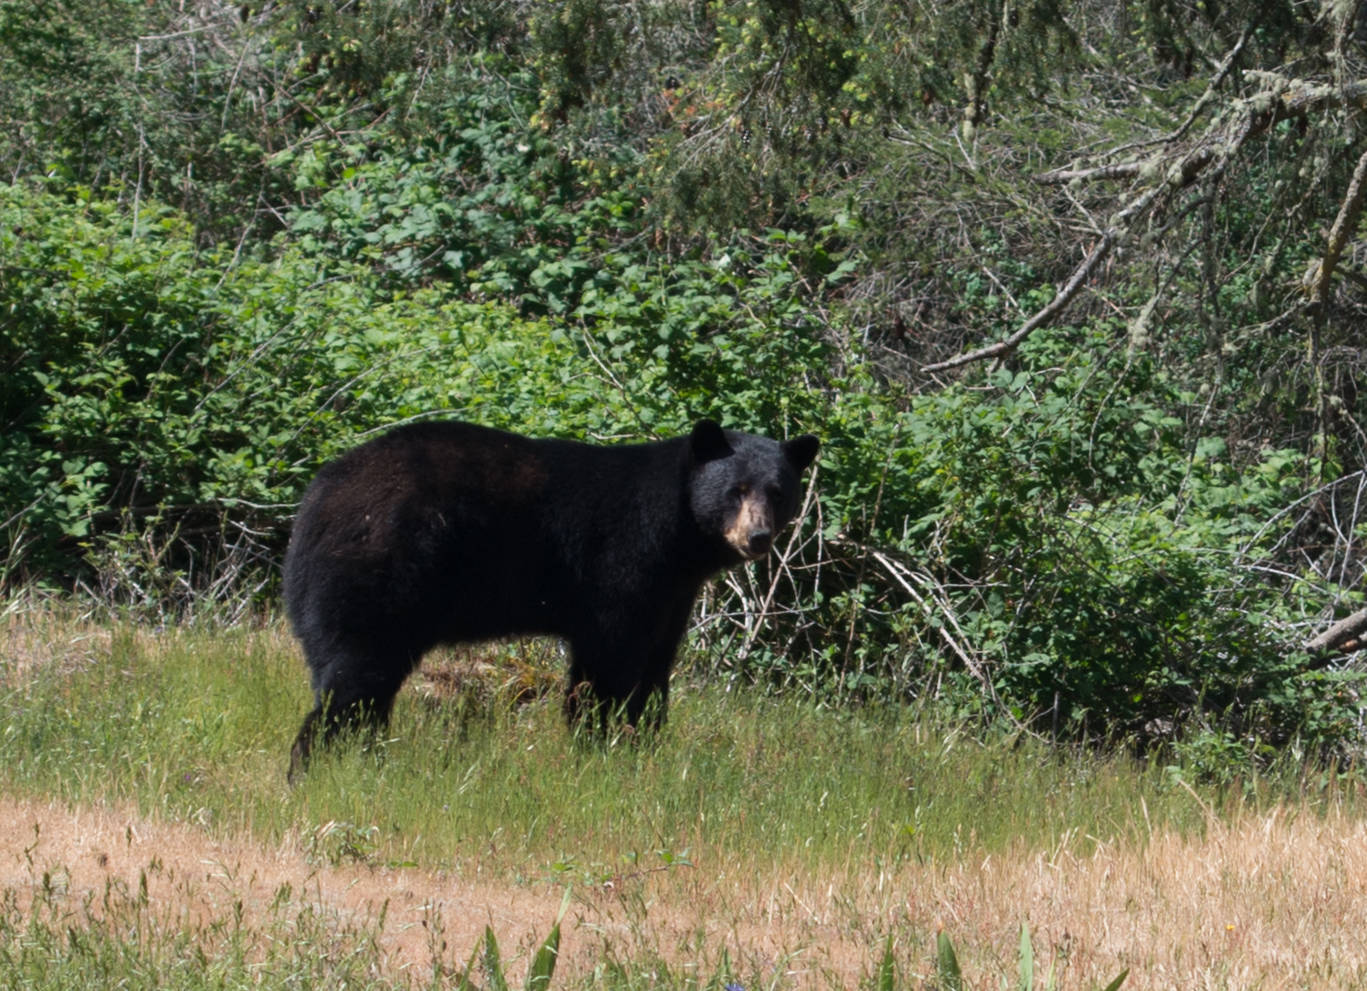 Richard Bell photo                                The black bear spotted on San Juan Island.